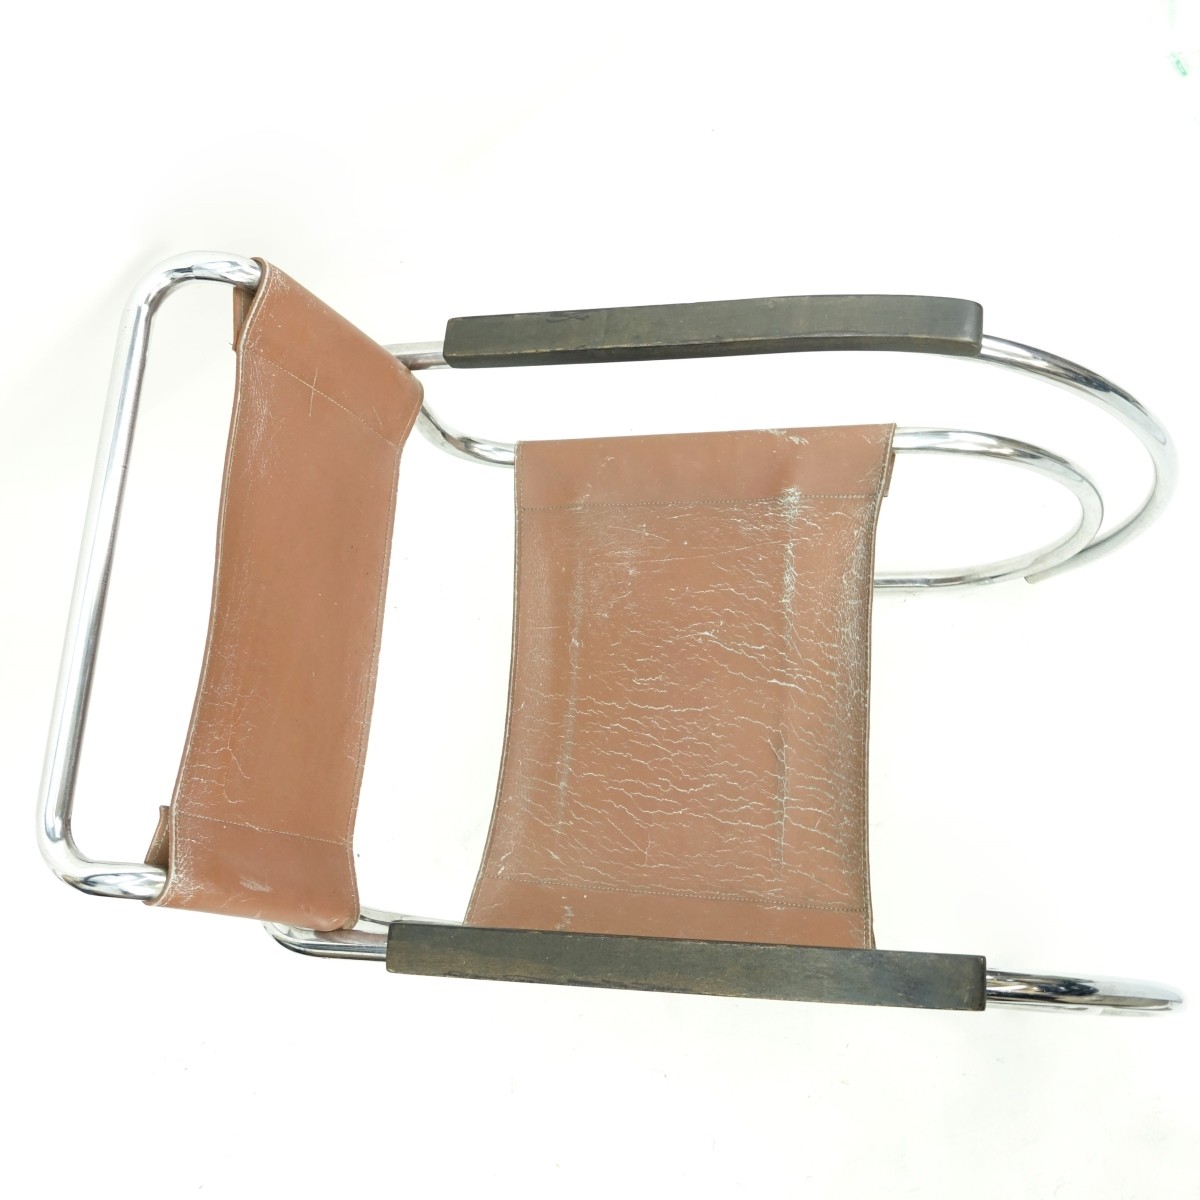 Knoll Leather & Chrome Mies van der Rohe Chair